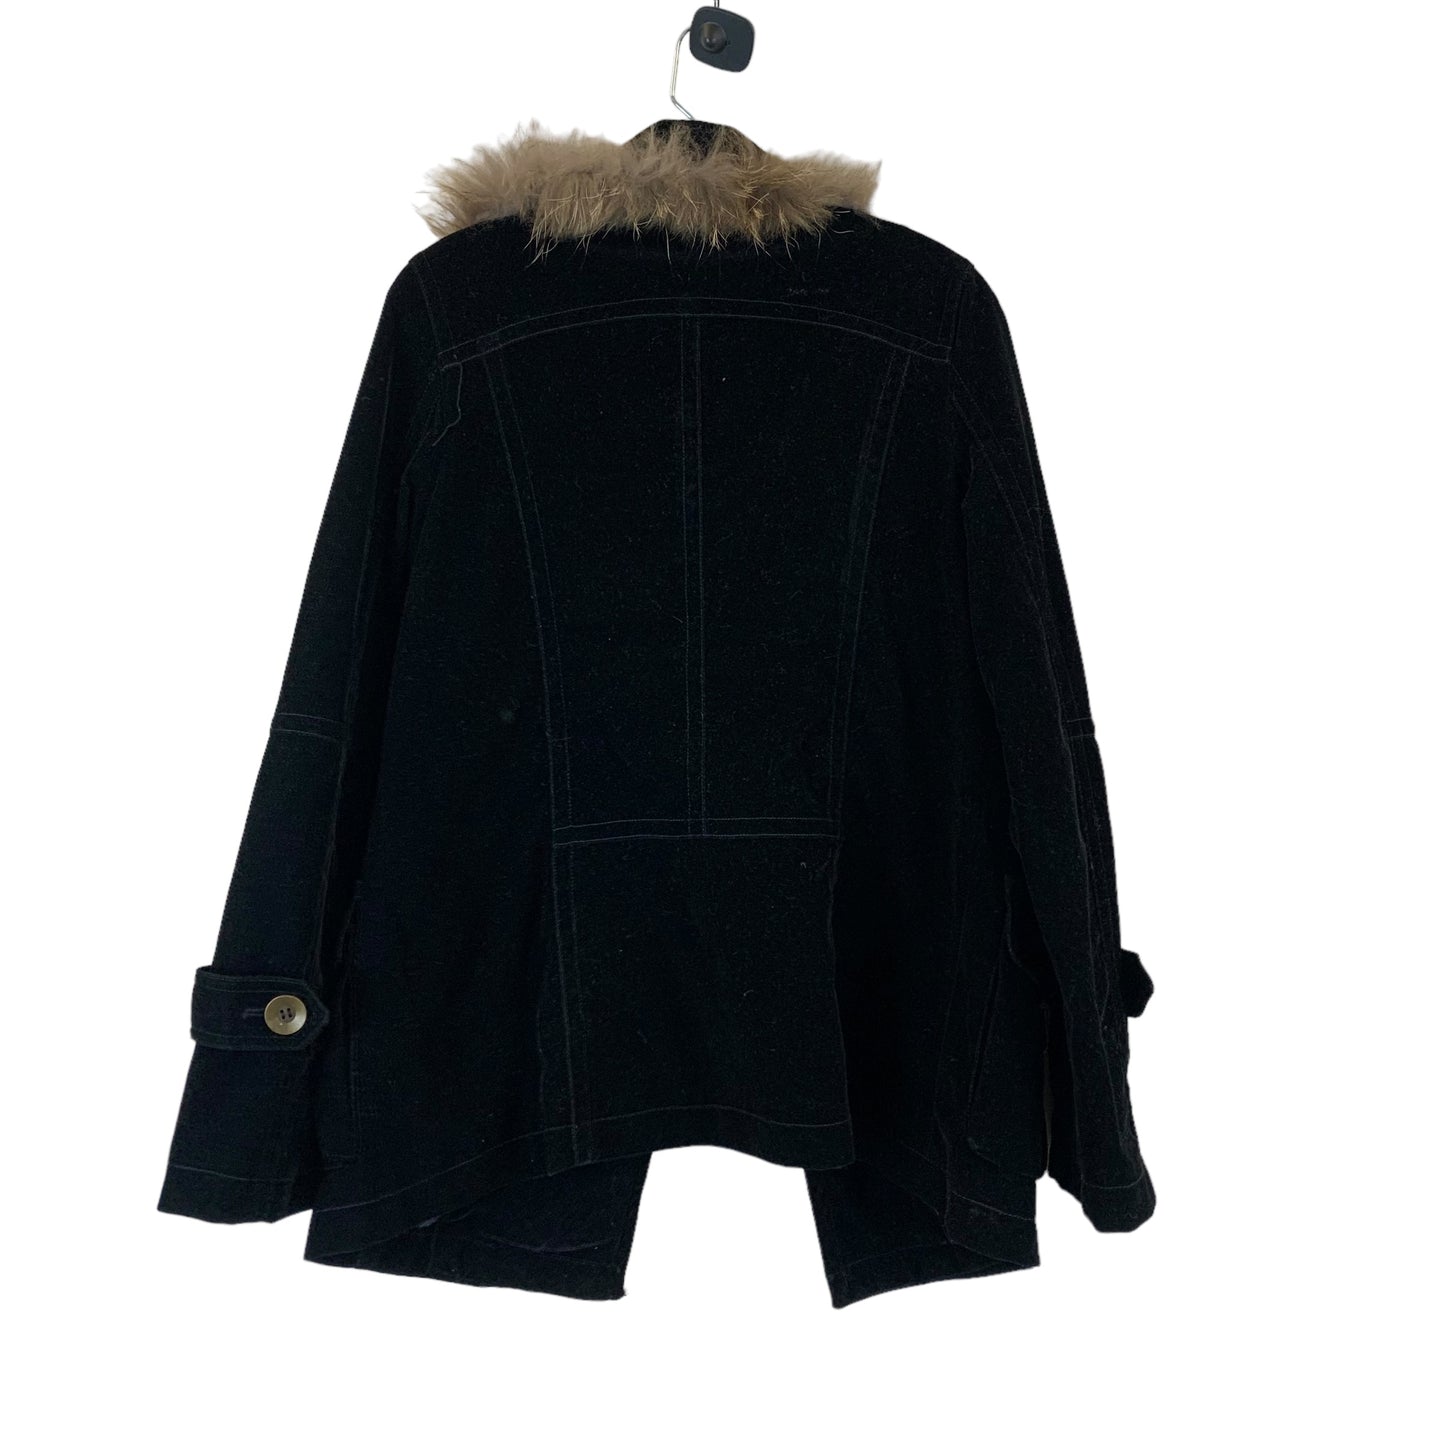 Jacket Other By Le Shop Size: L